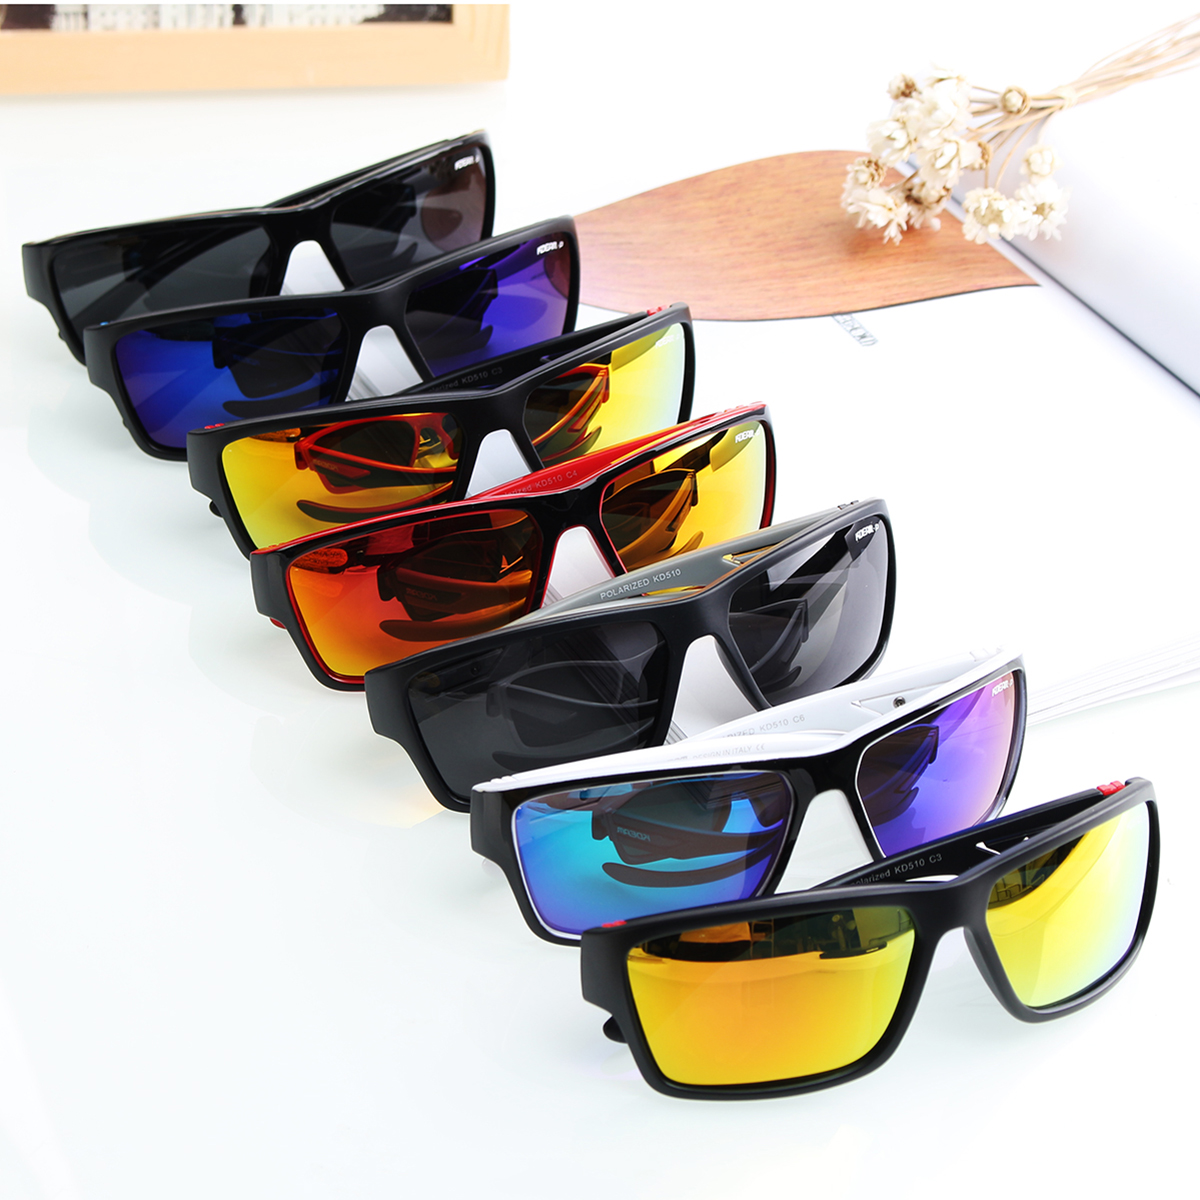 KDEAM-KD510-Summer-Polarized-Sunglasses-Men-HD-Polaroid-Lens-Exercise-Sun-Glasses-Goggles-With-Brand-1321887